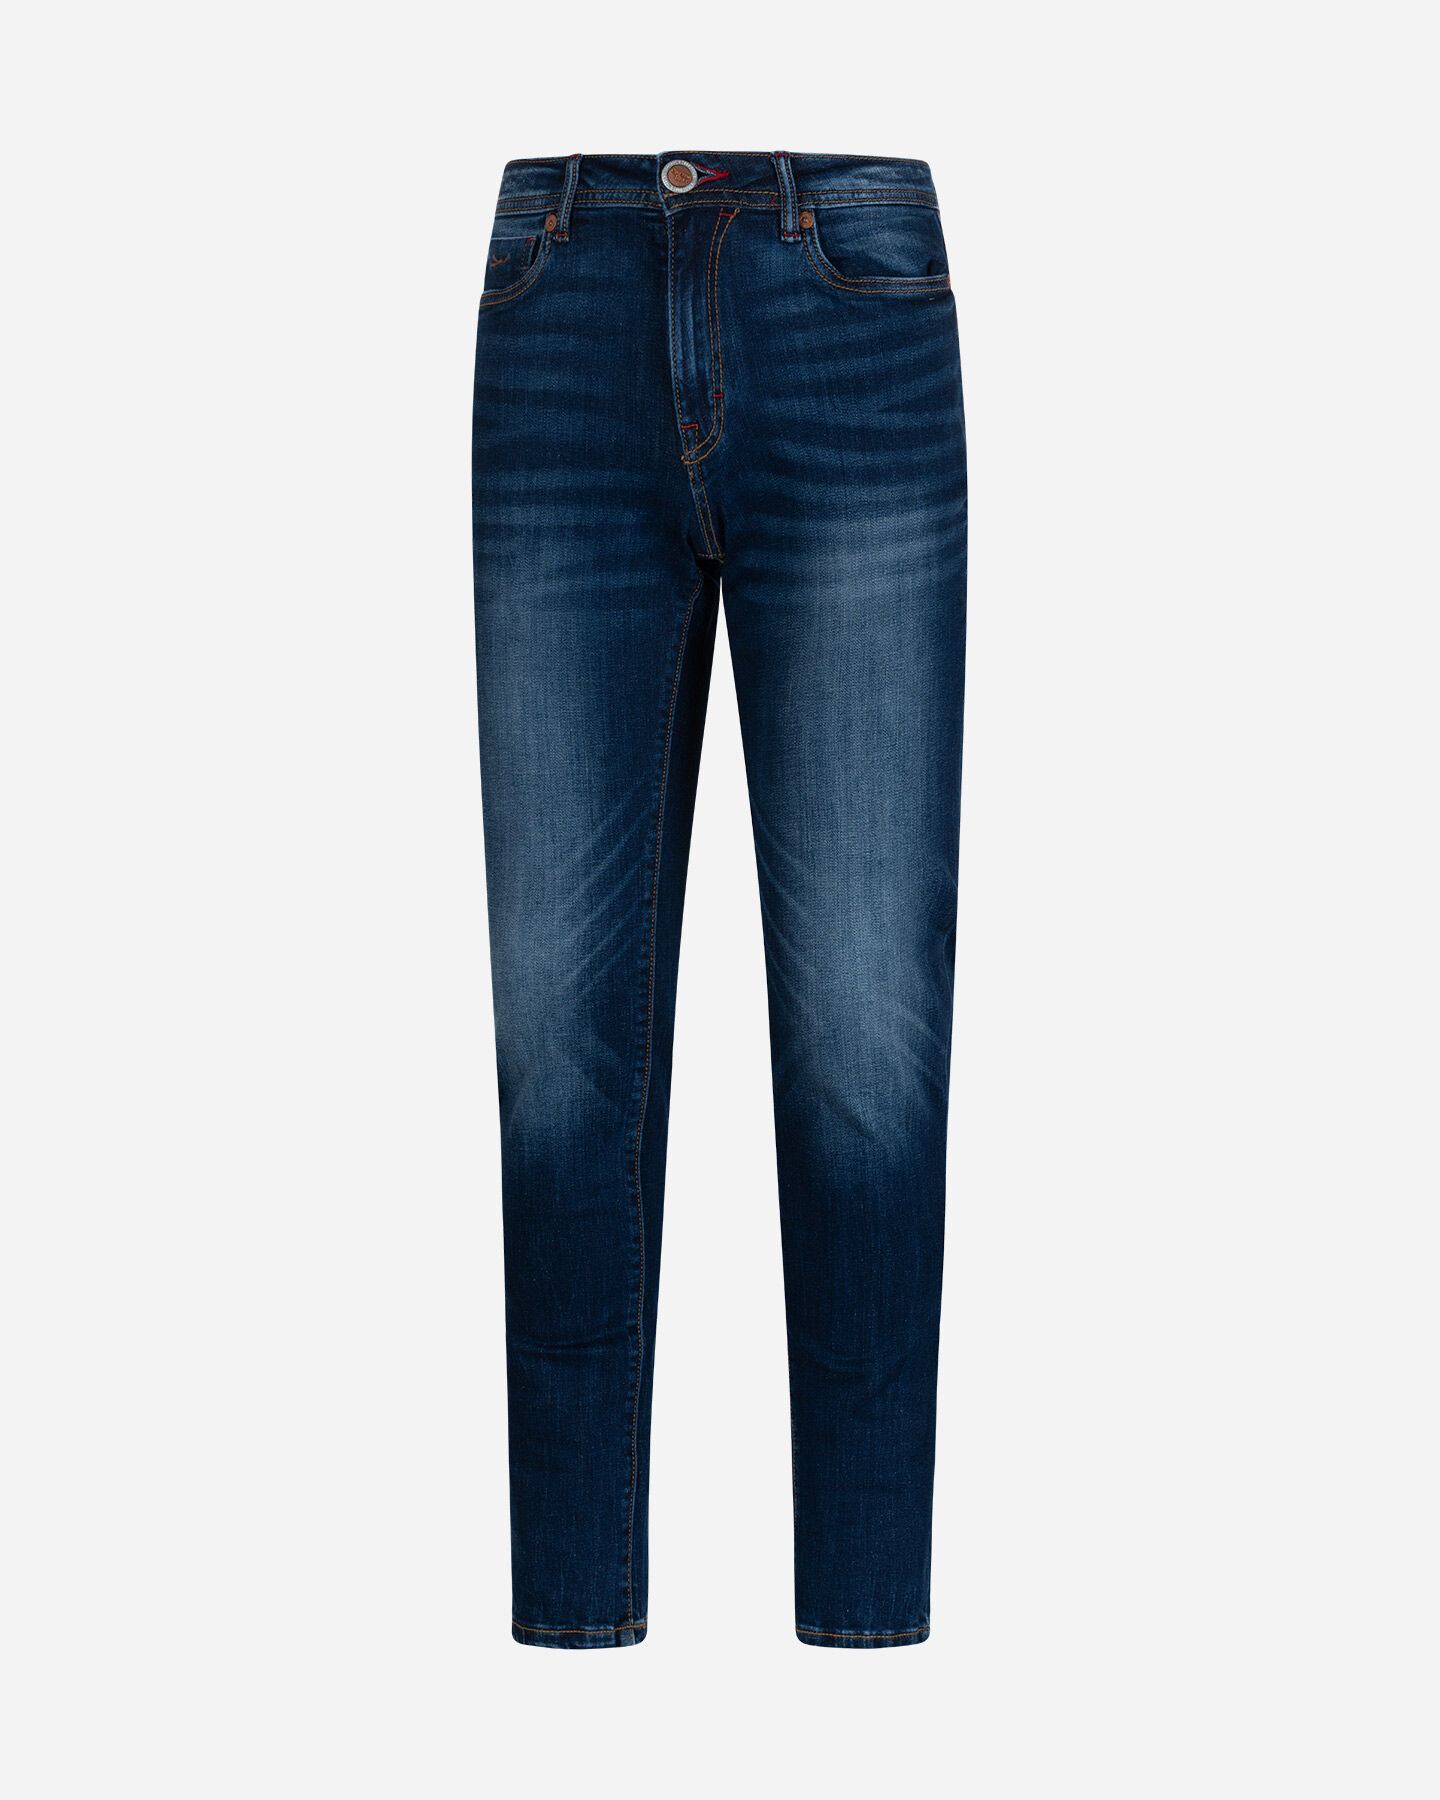  Jeans COTTON BELT 5 POCKET M S4126997|DD|30 scatto 4